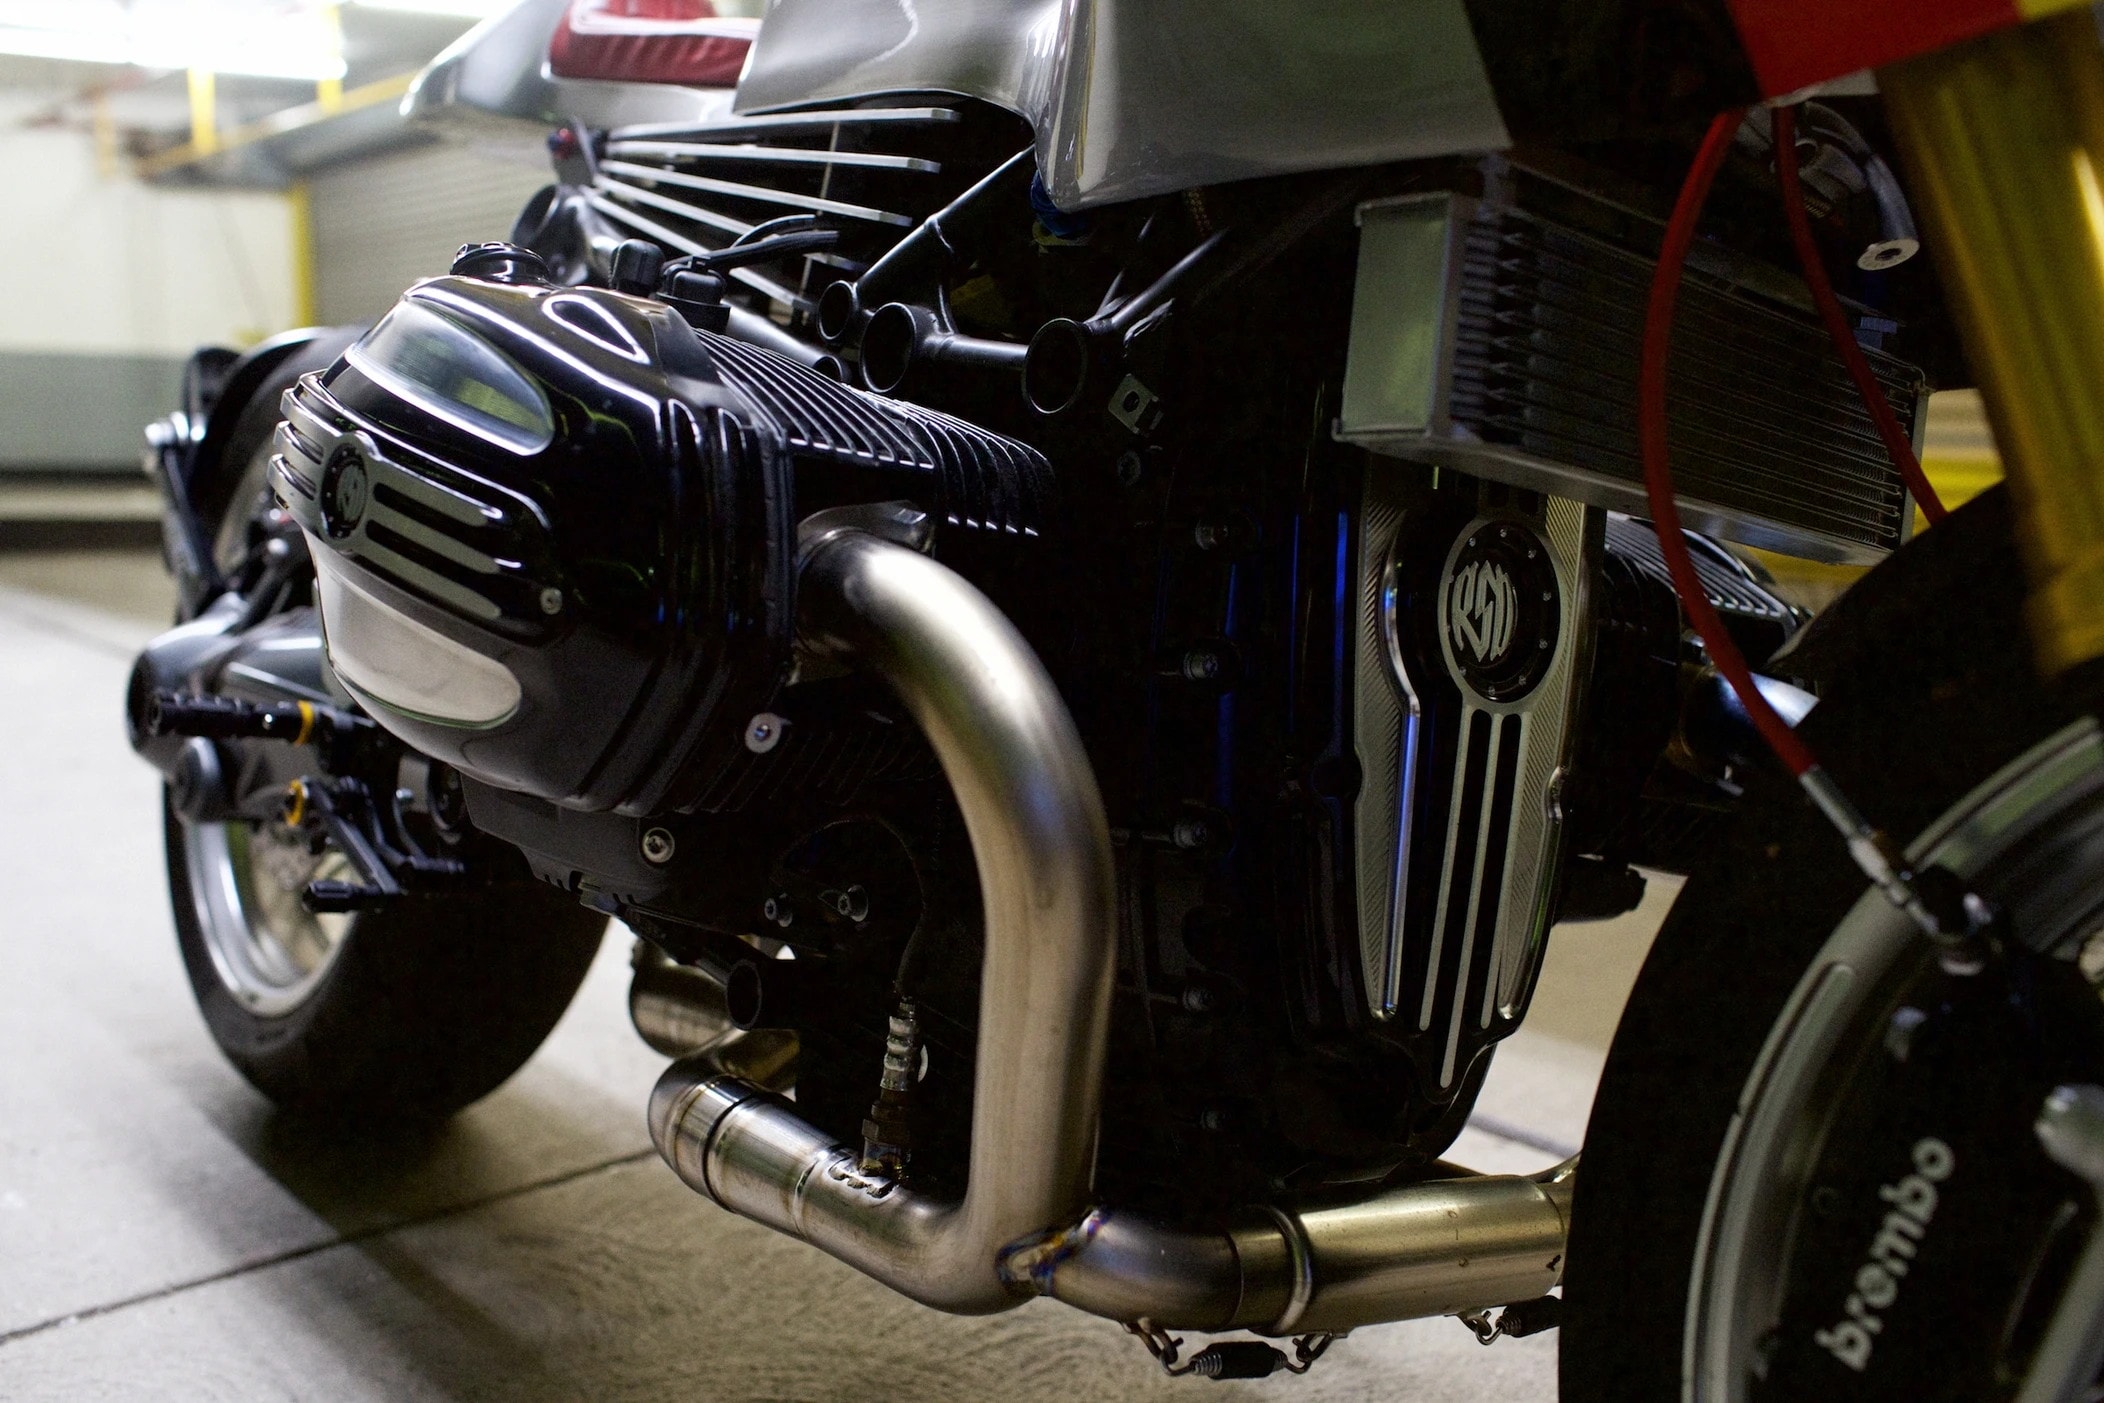 JSK Moto Co.: Crafting Bespoke Motorcycle Marvels